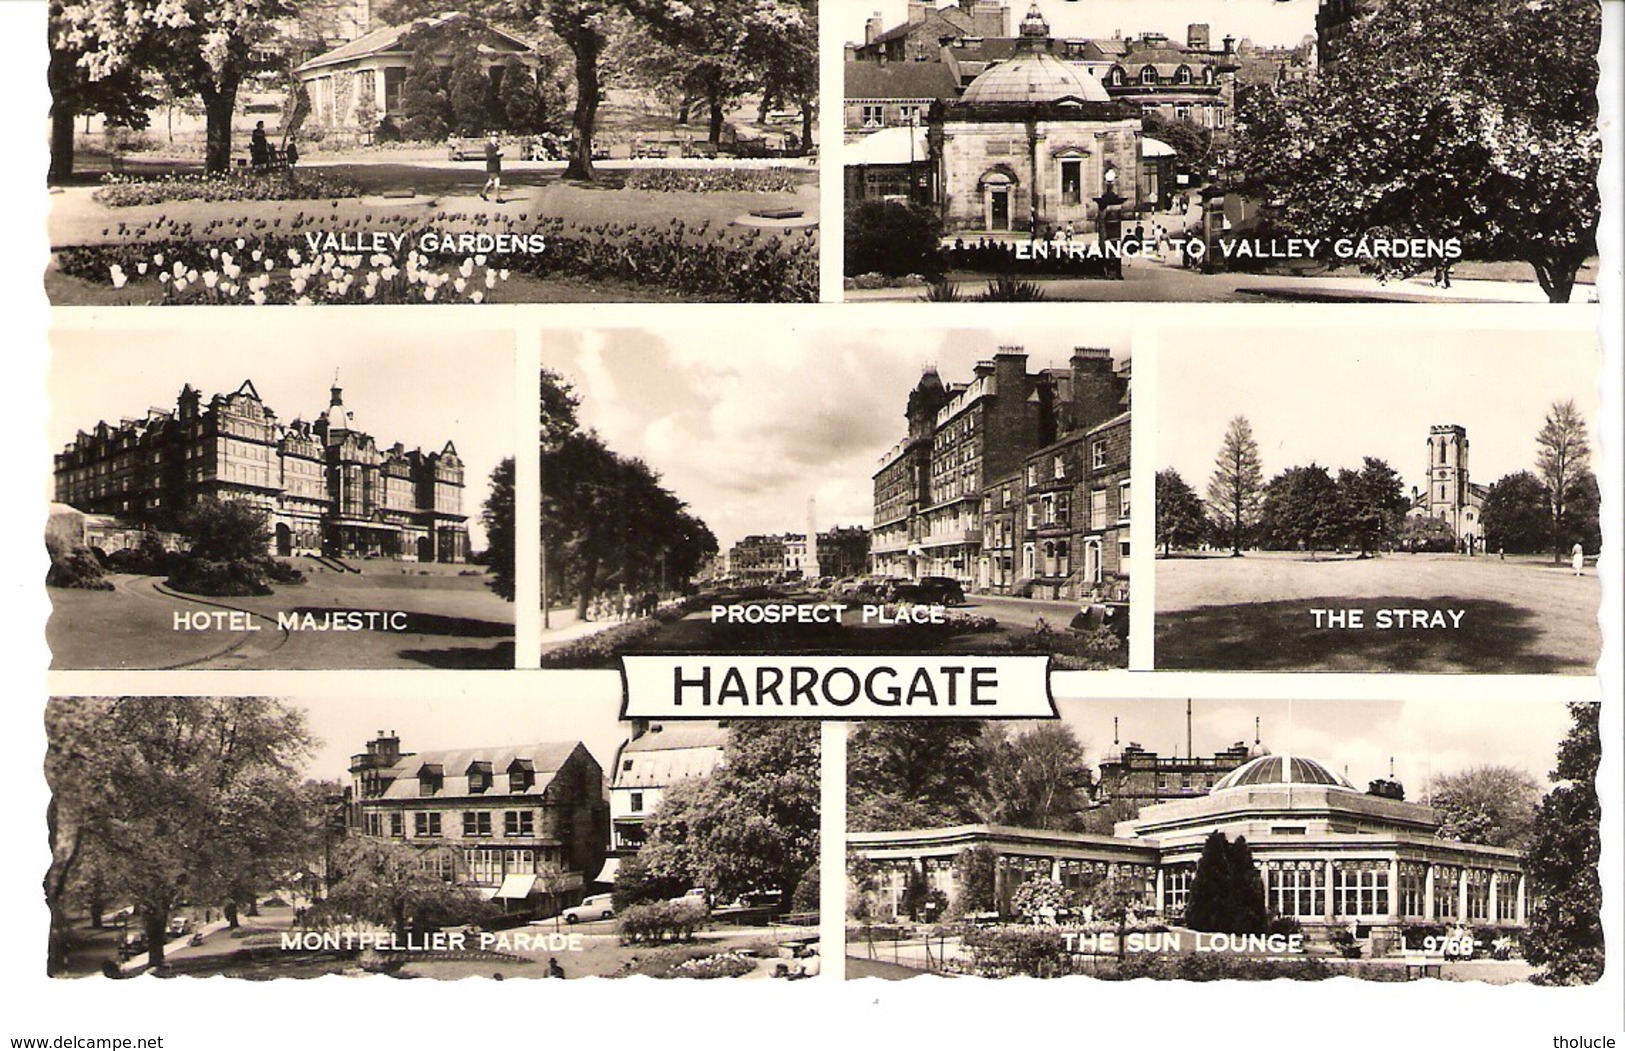 Angleterre-Harrogate-Yorkshire+/-1950-Valey Gardens-Hotel Majestic-Montpellier Parade-Prospect Place-The Stay-Sun Lounge - Harrogate